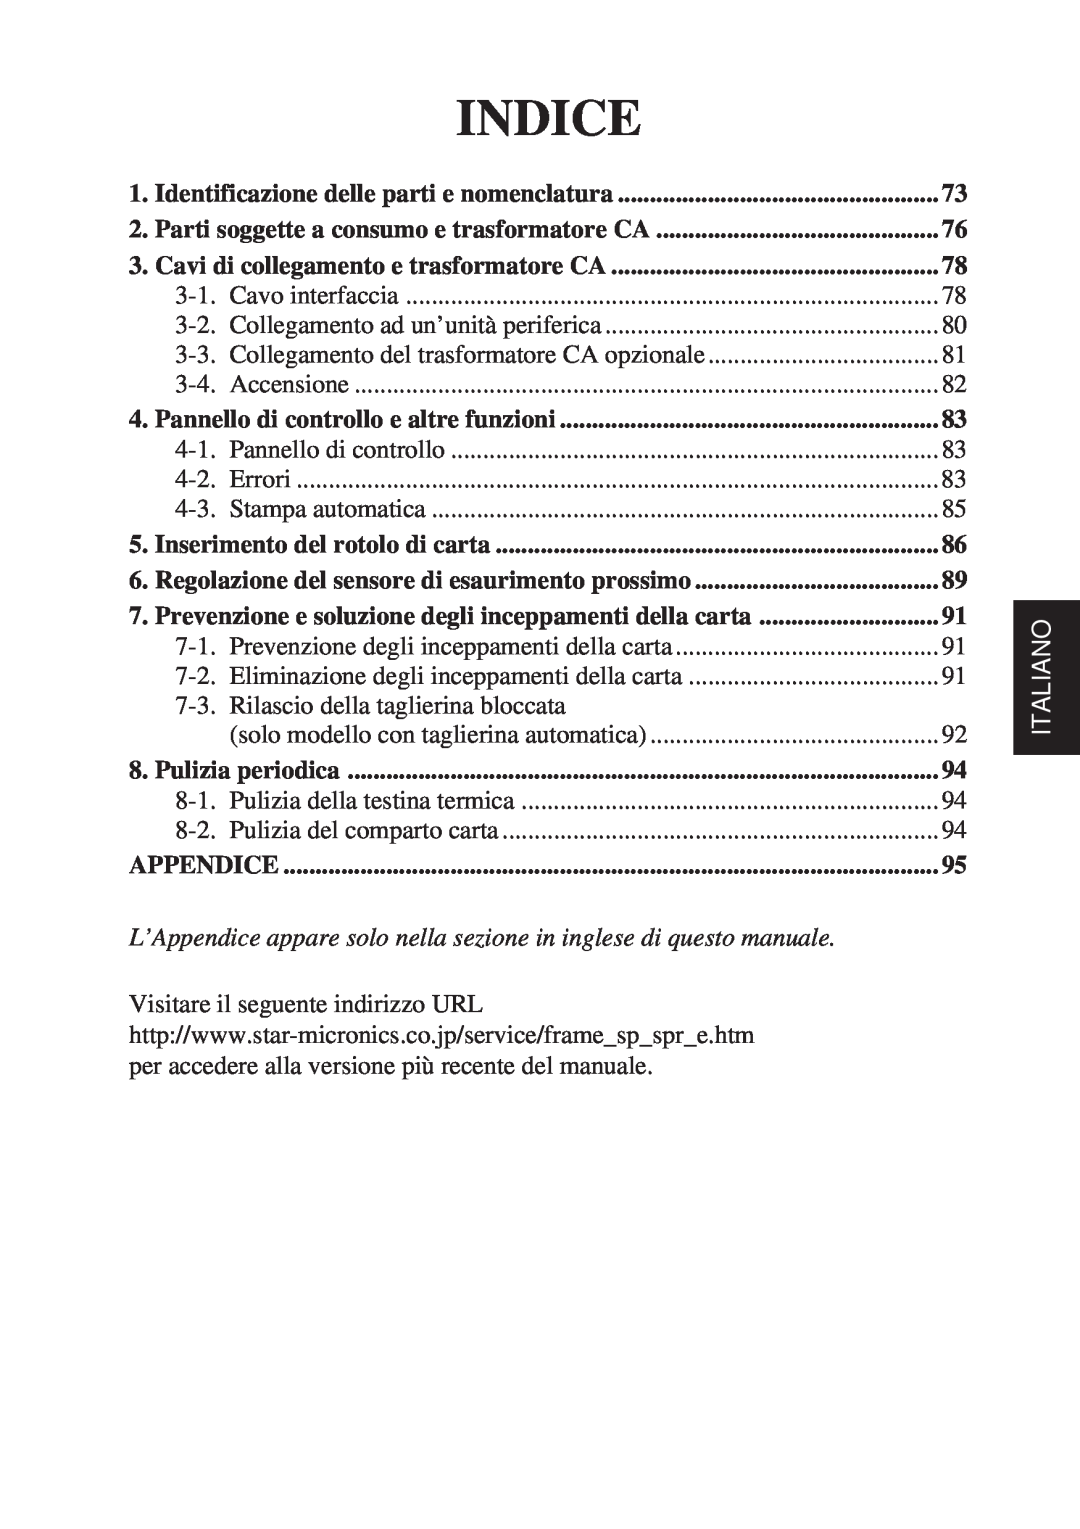 Star Micronics TSP600 user manual Indice, Italiano 